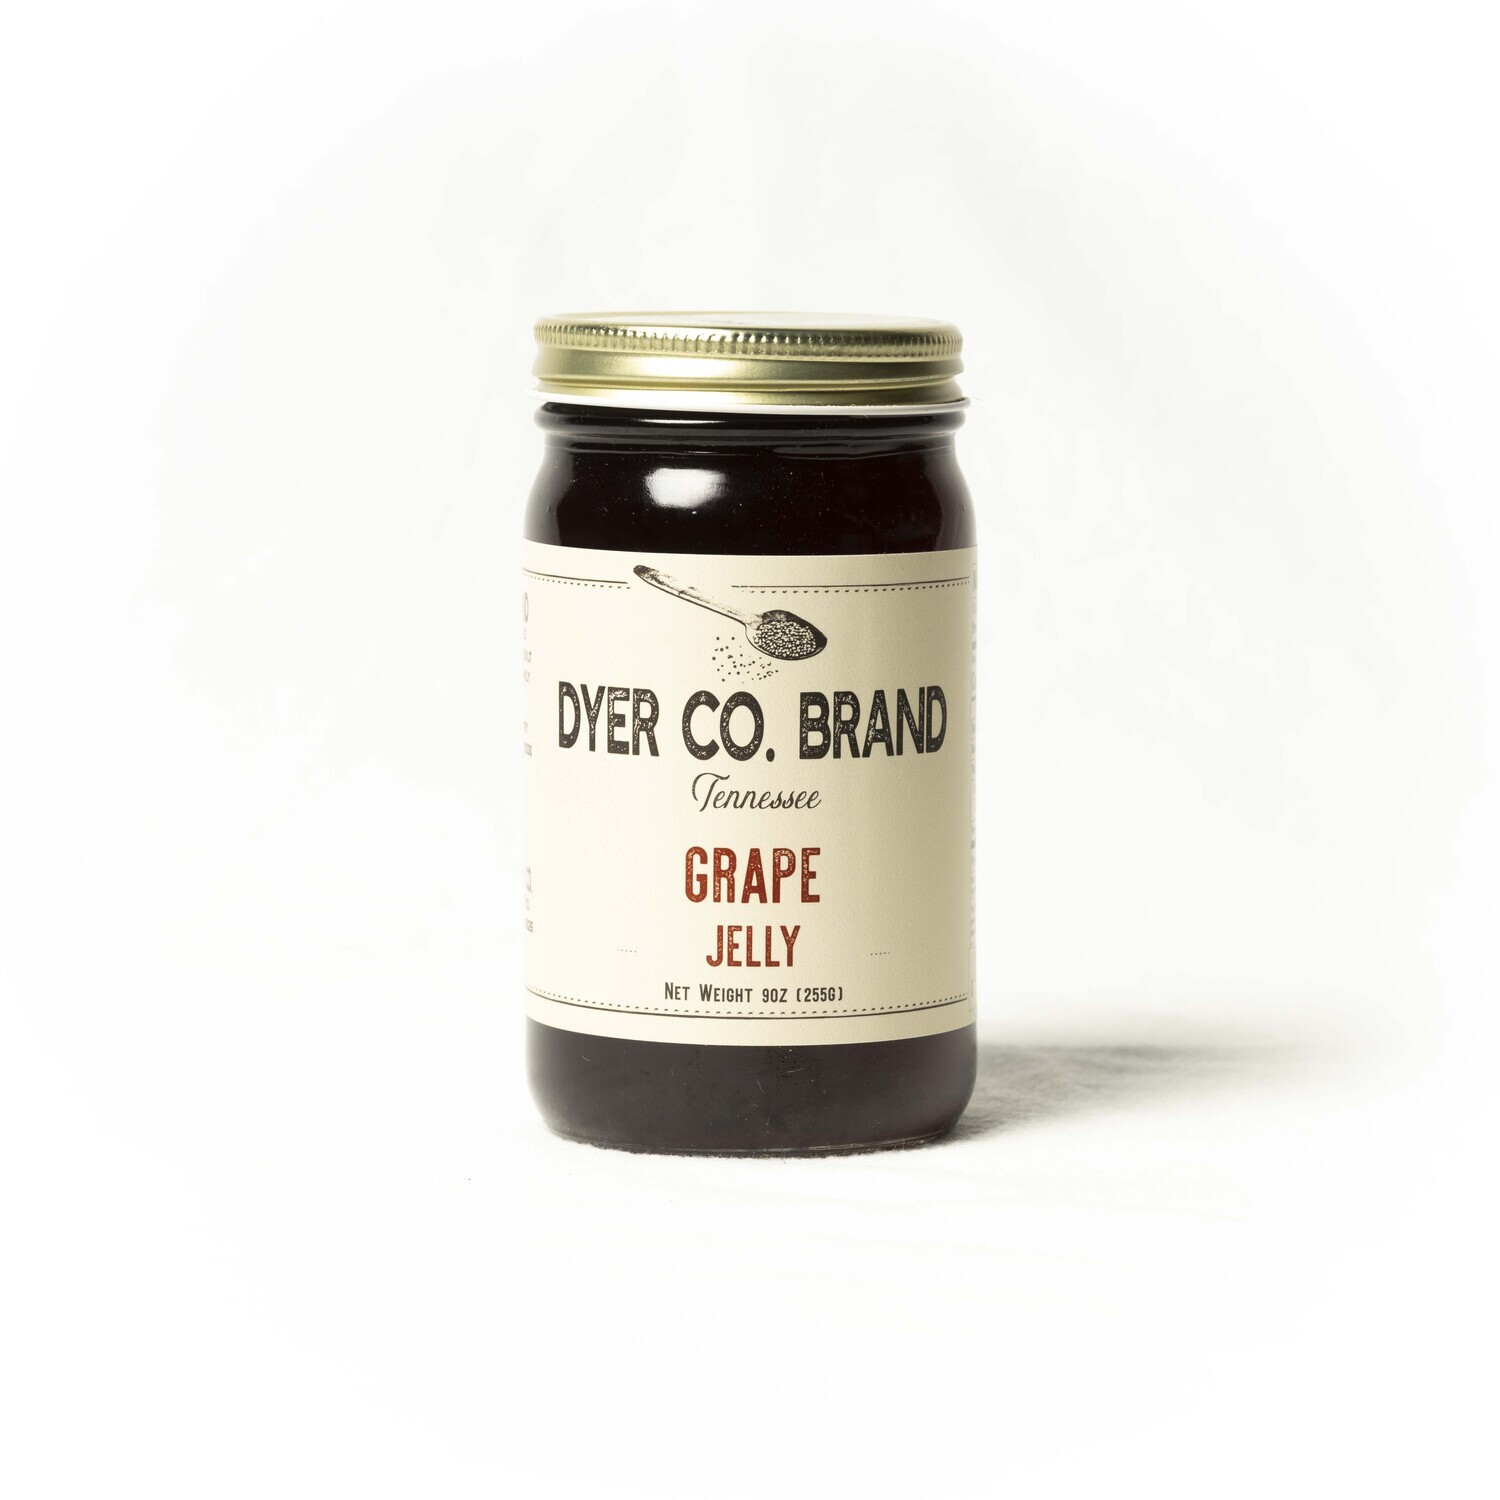 Dyer Co Brand Grape Jelly